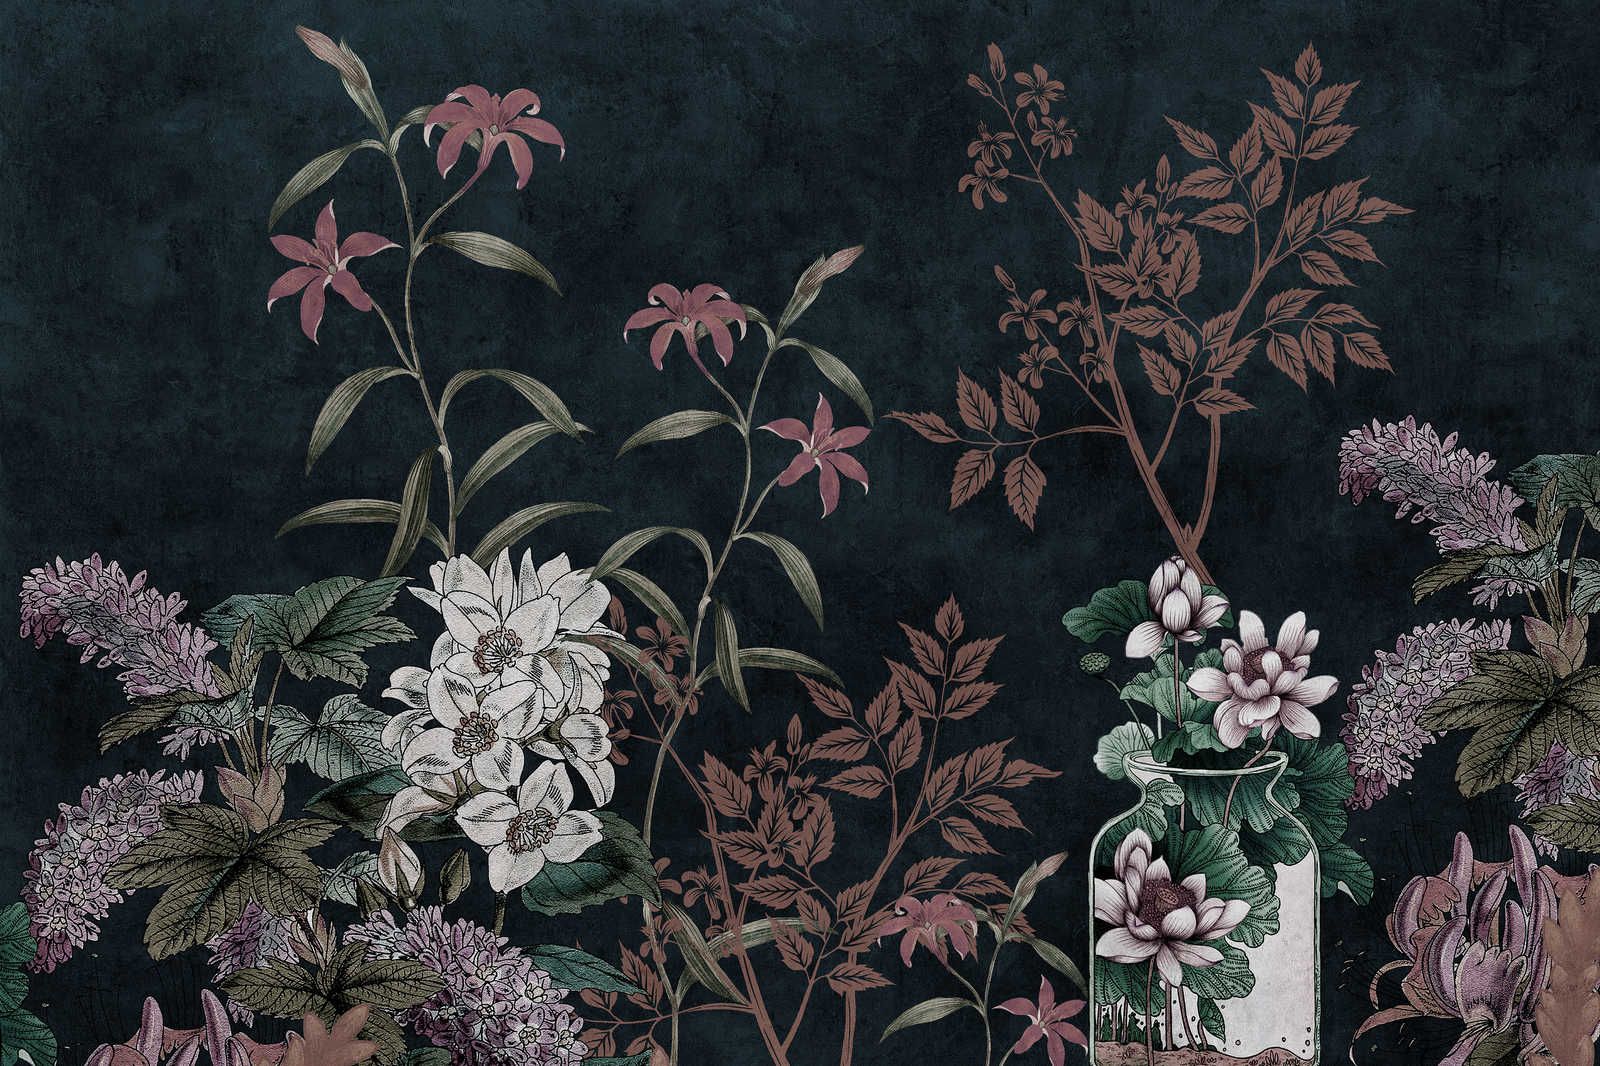             Dark Room 2 - Schwarzes Leinwandbild Botanical Muster Rosa – 0,90 m x 0,60 m
        